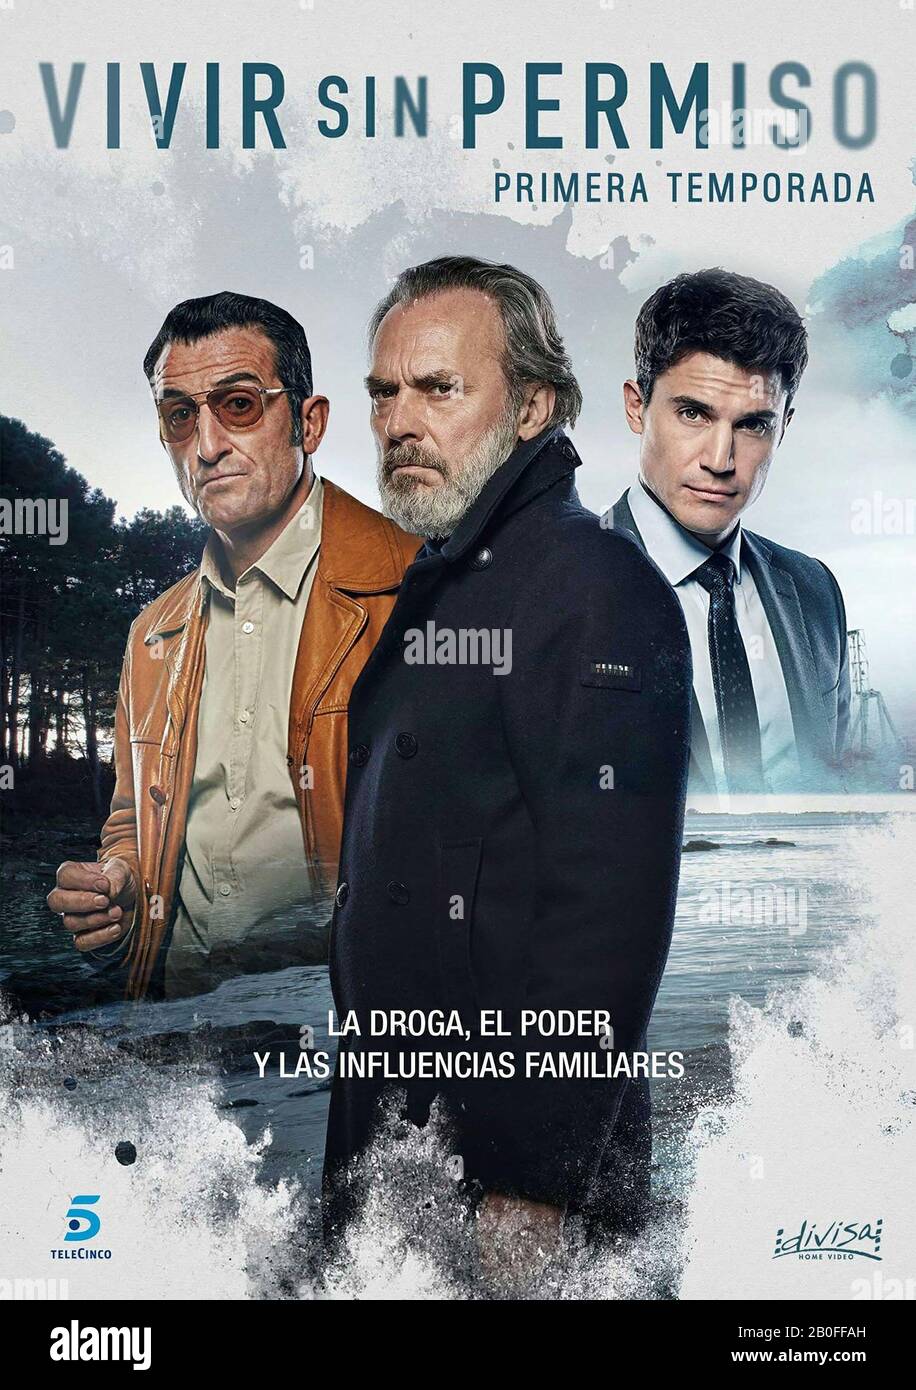 vivir-sin-permiso-tv-series-2018-spain-created-by-aitor-gabilondo-luis-zahera-jose-coronado-alex-gonzalez-poster-spain-2B0FFAH.jpg